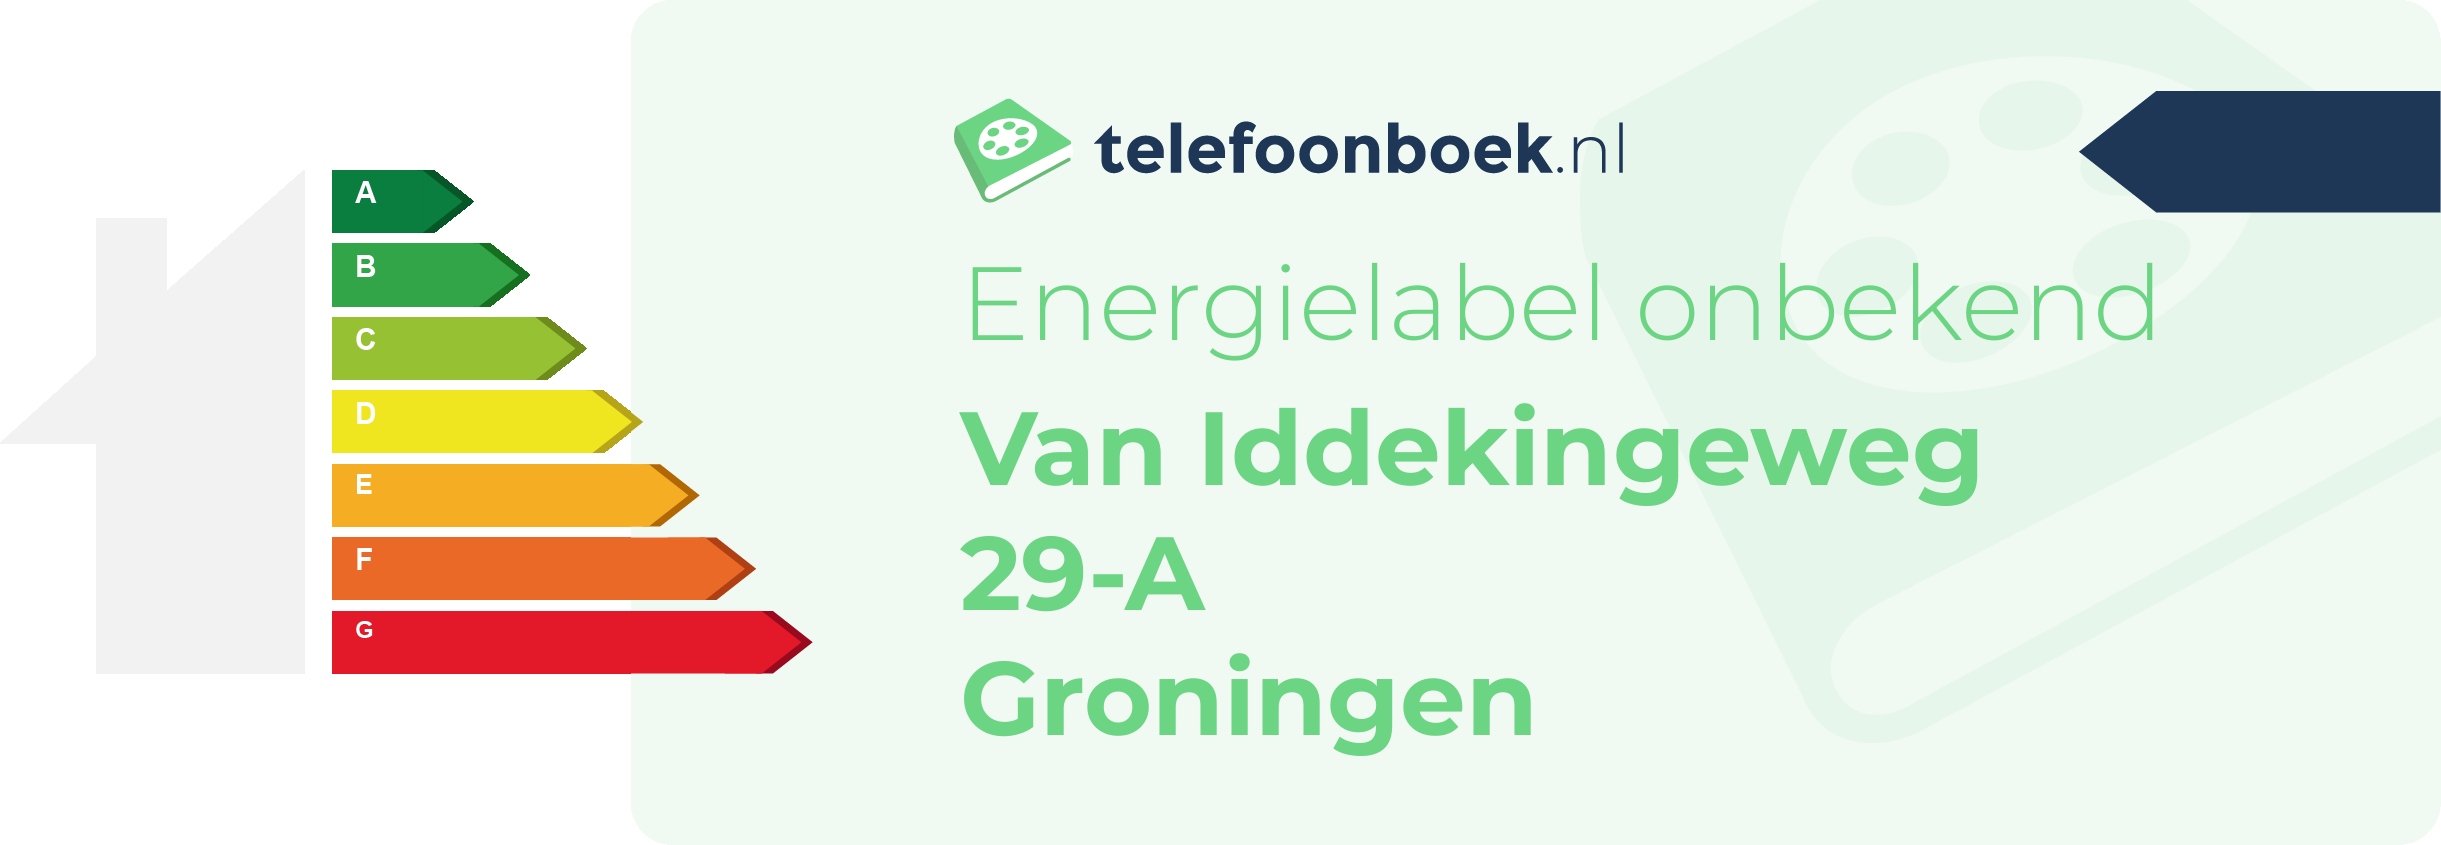 Energielabel Van Iddekingeweg 29-A Groningen